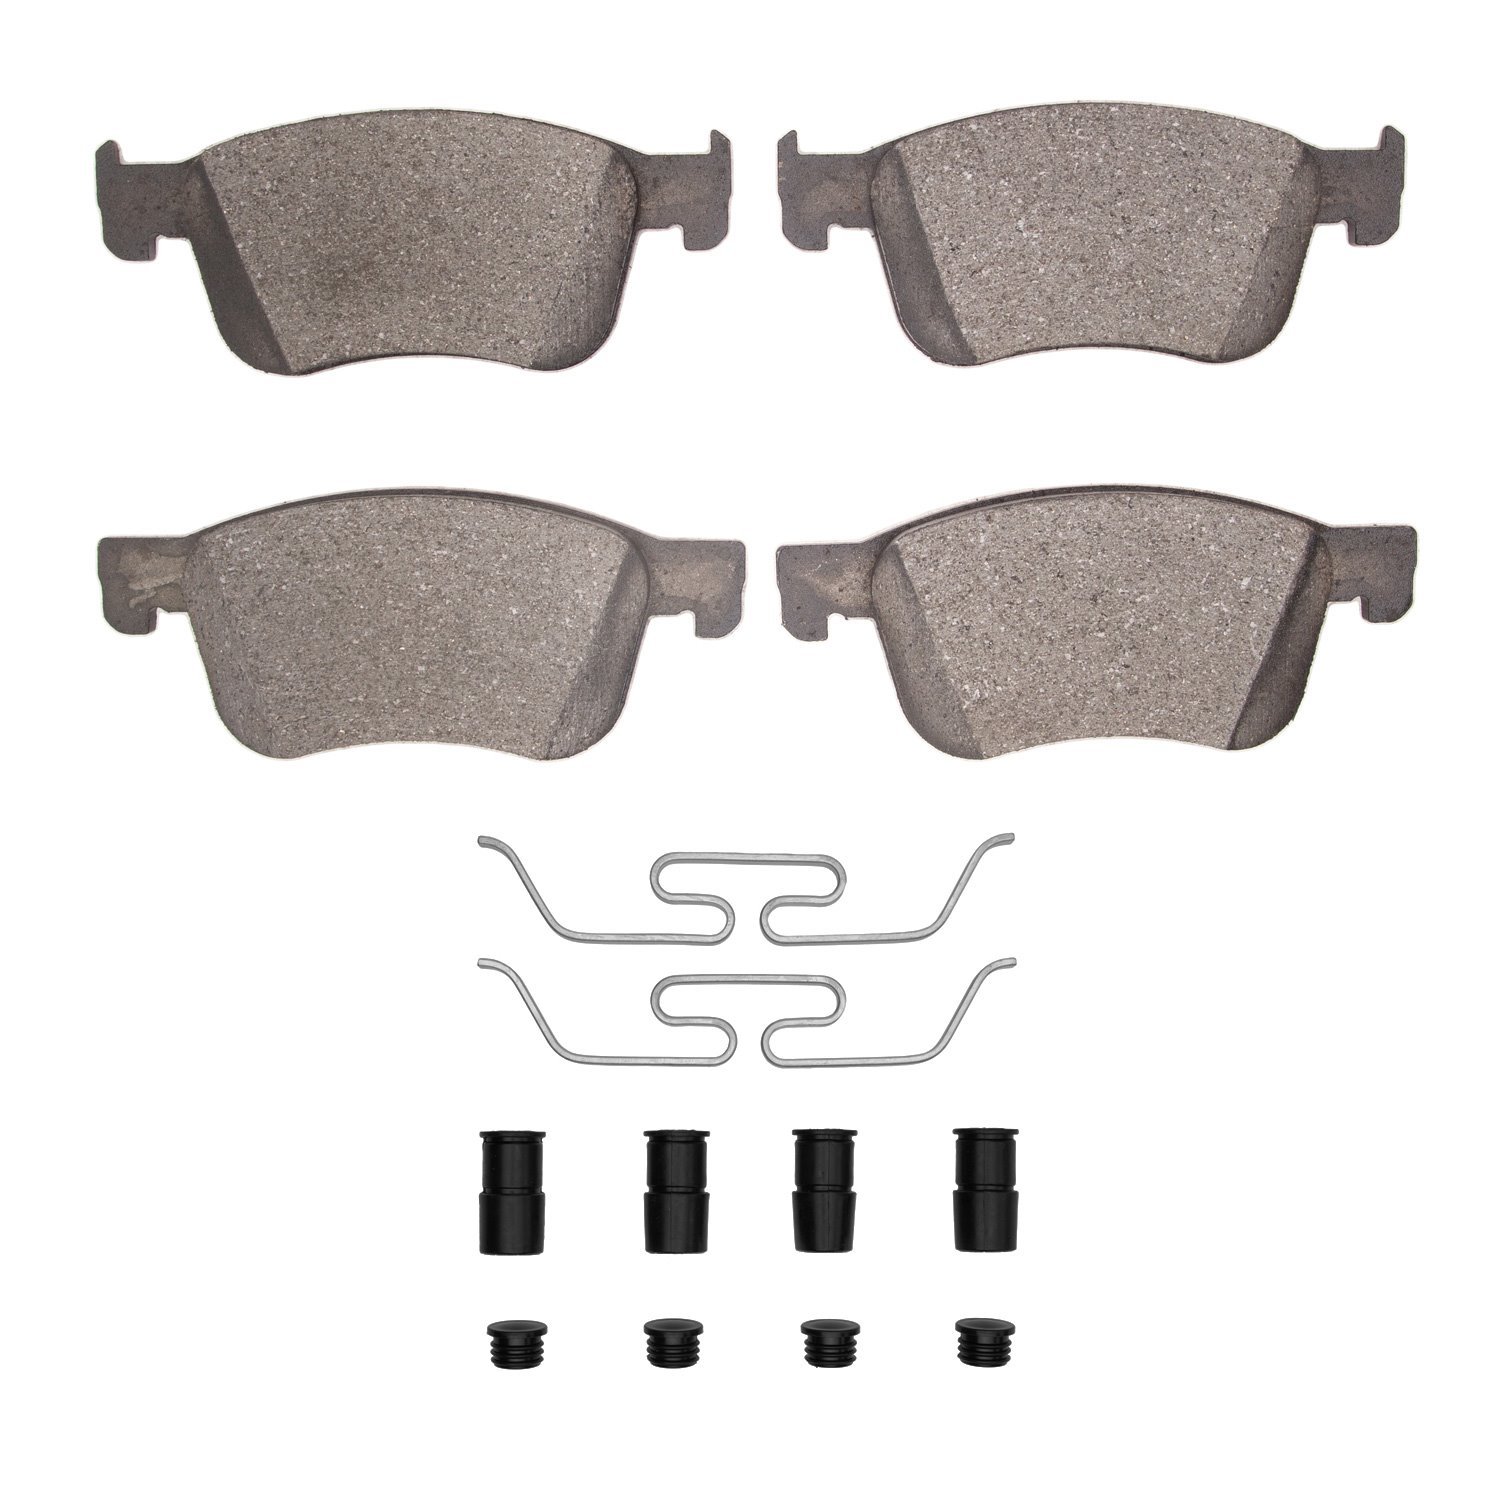 1551-2115-01 5000 Advanced Ceramic Brake Pads & Hardware Kit, Fits Select Acura/Honda, Position: Front